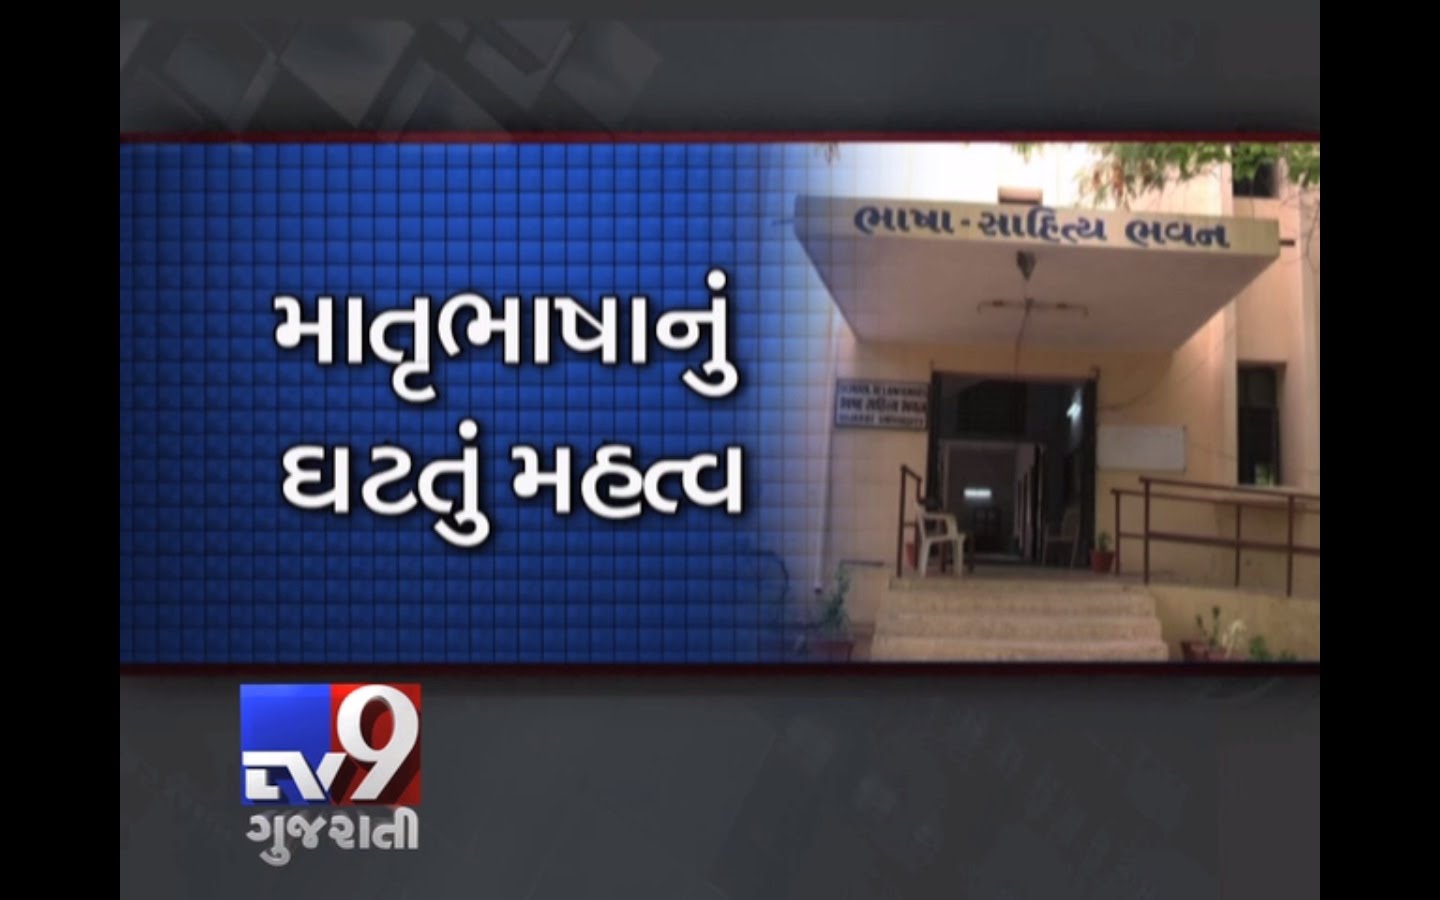 Linguists hope to save endangered gujarati language, Ahmedabad – Tv9 Gujarati